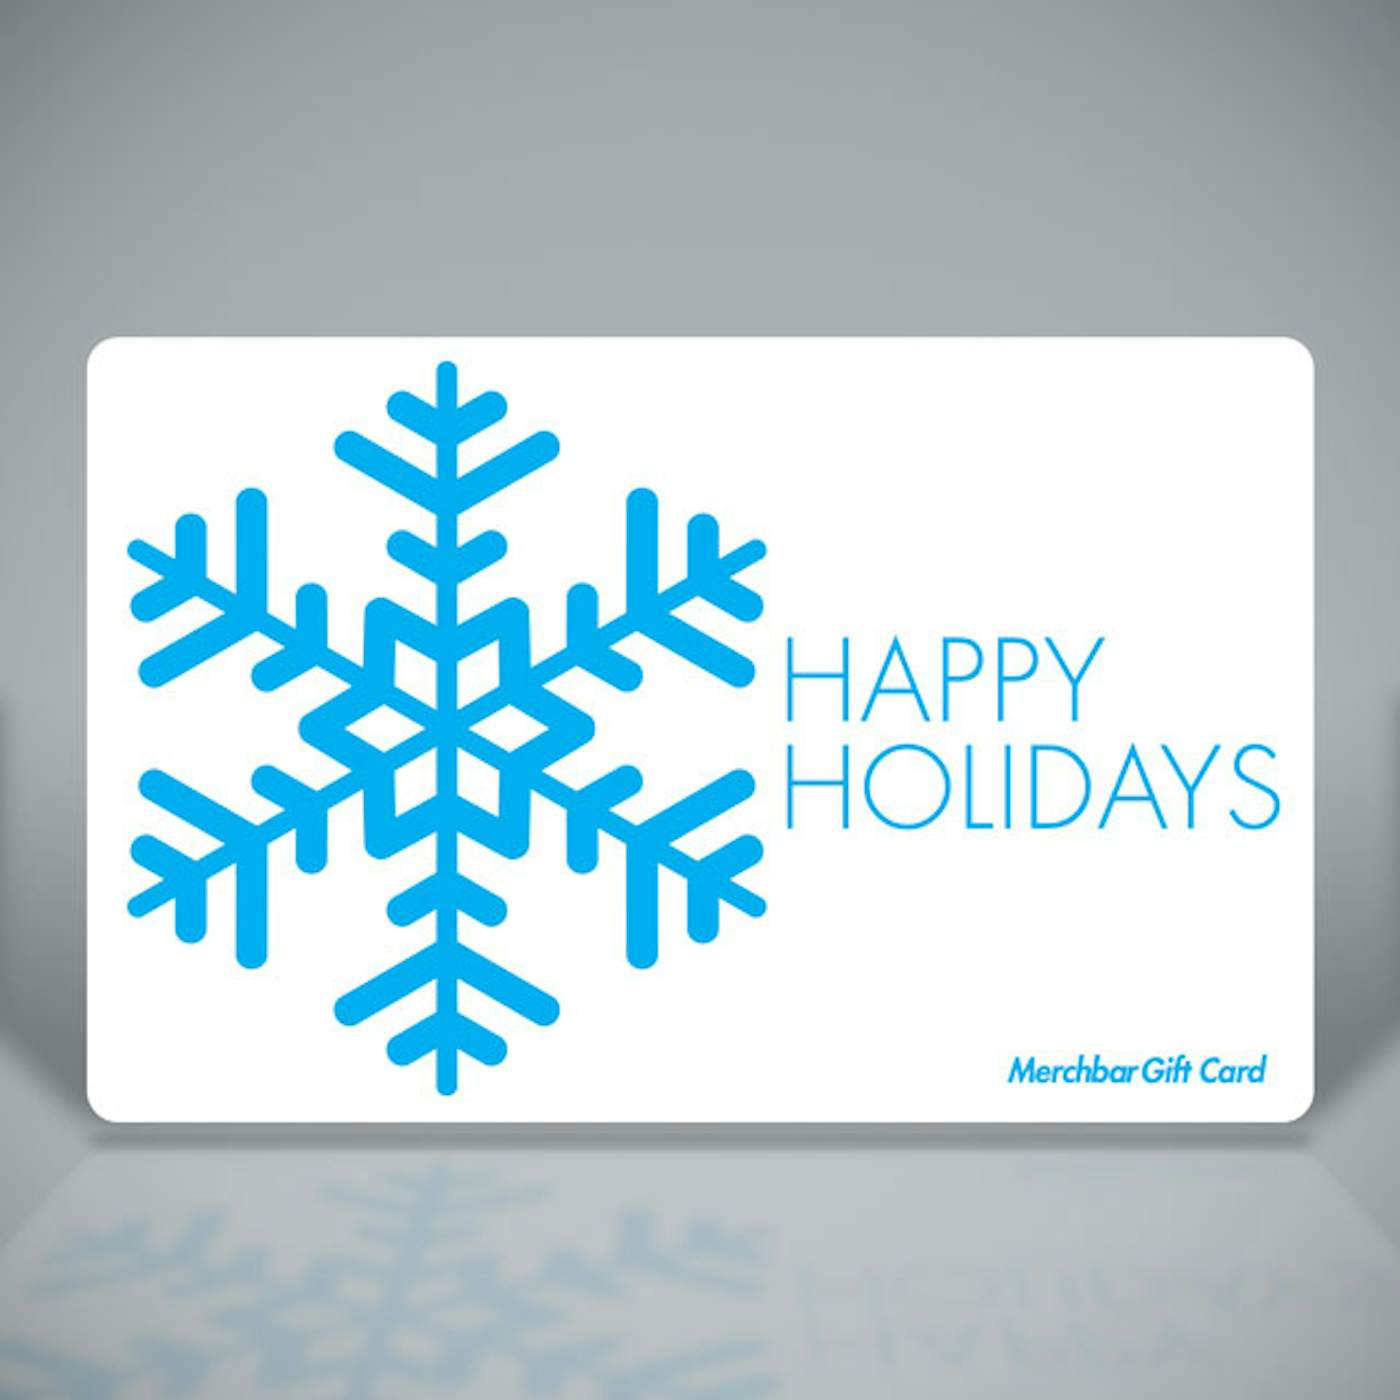 Merchbar Gift Cards Happy Holidays